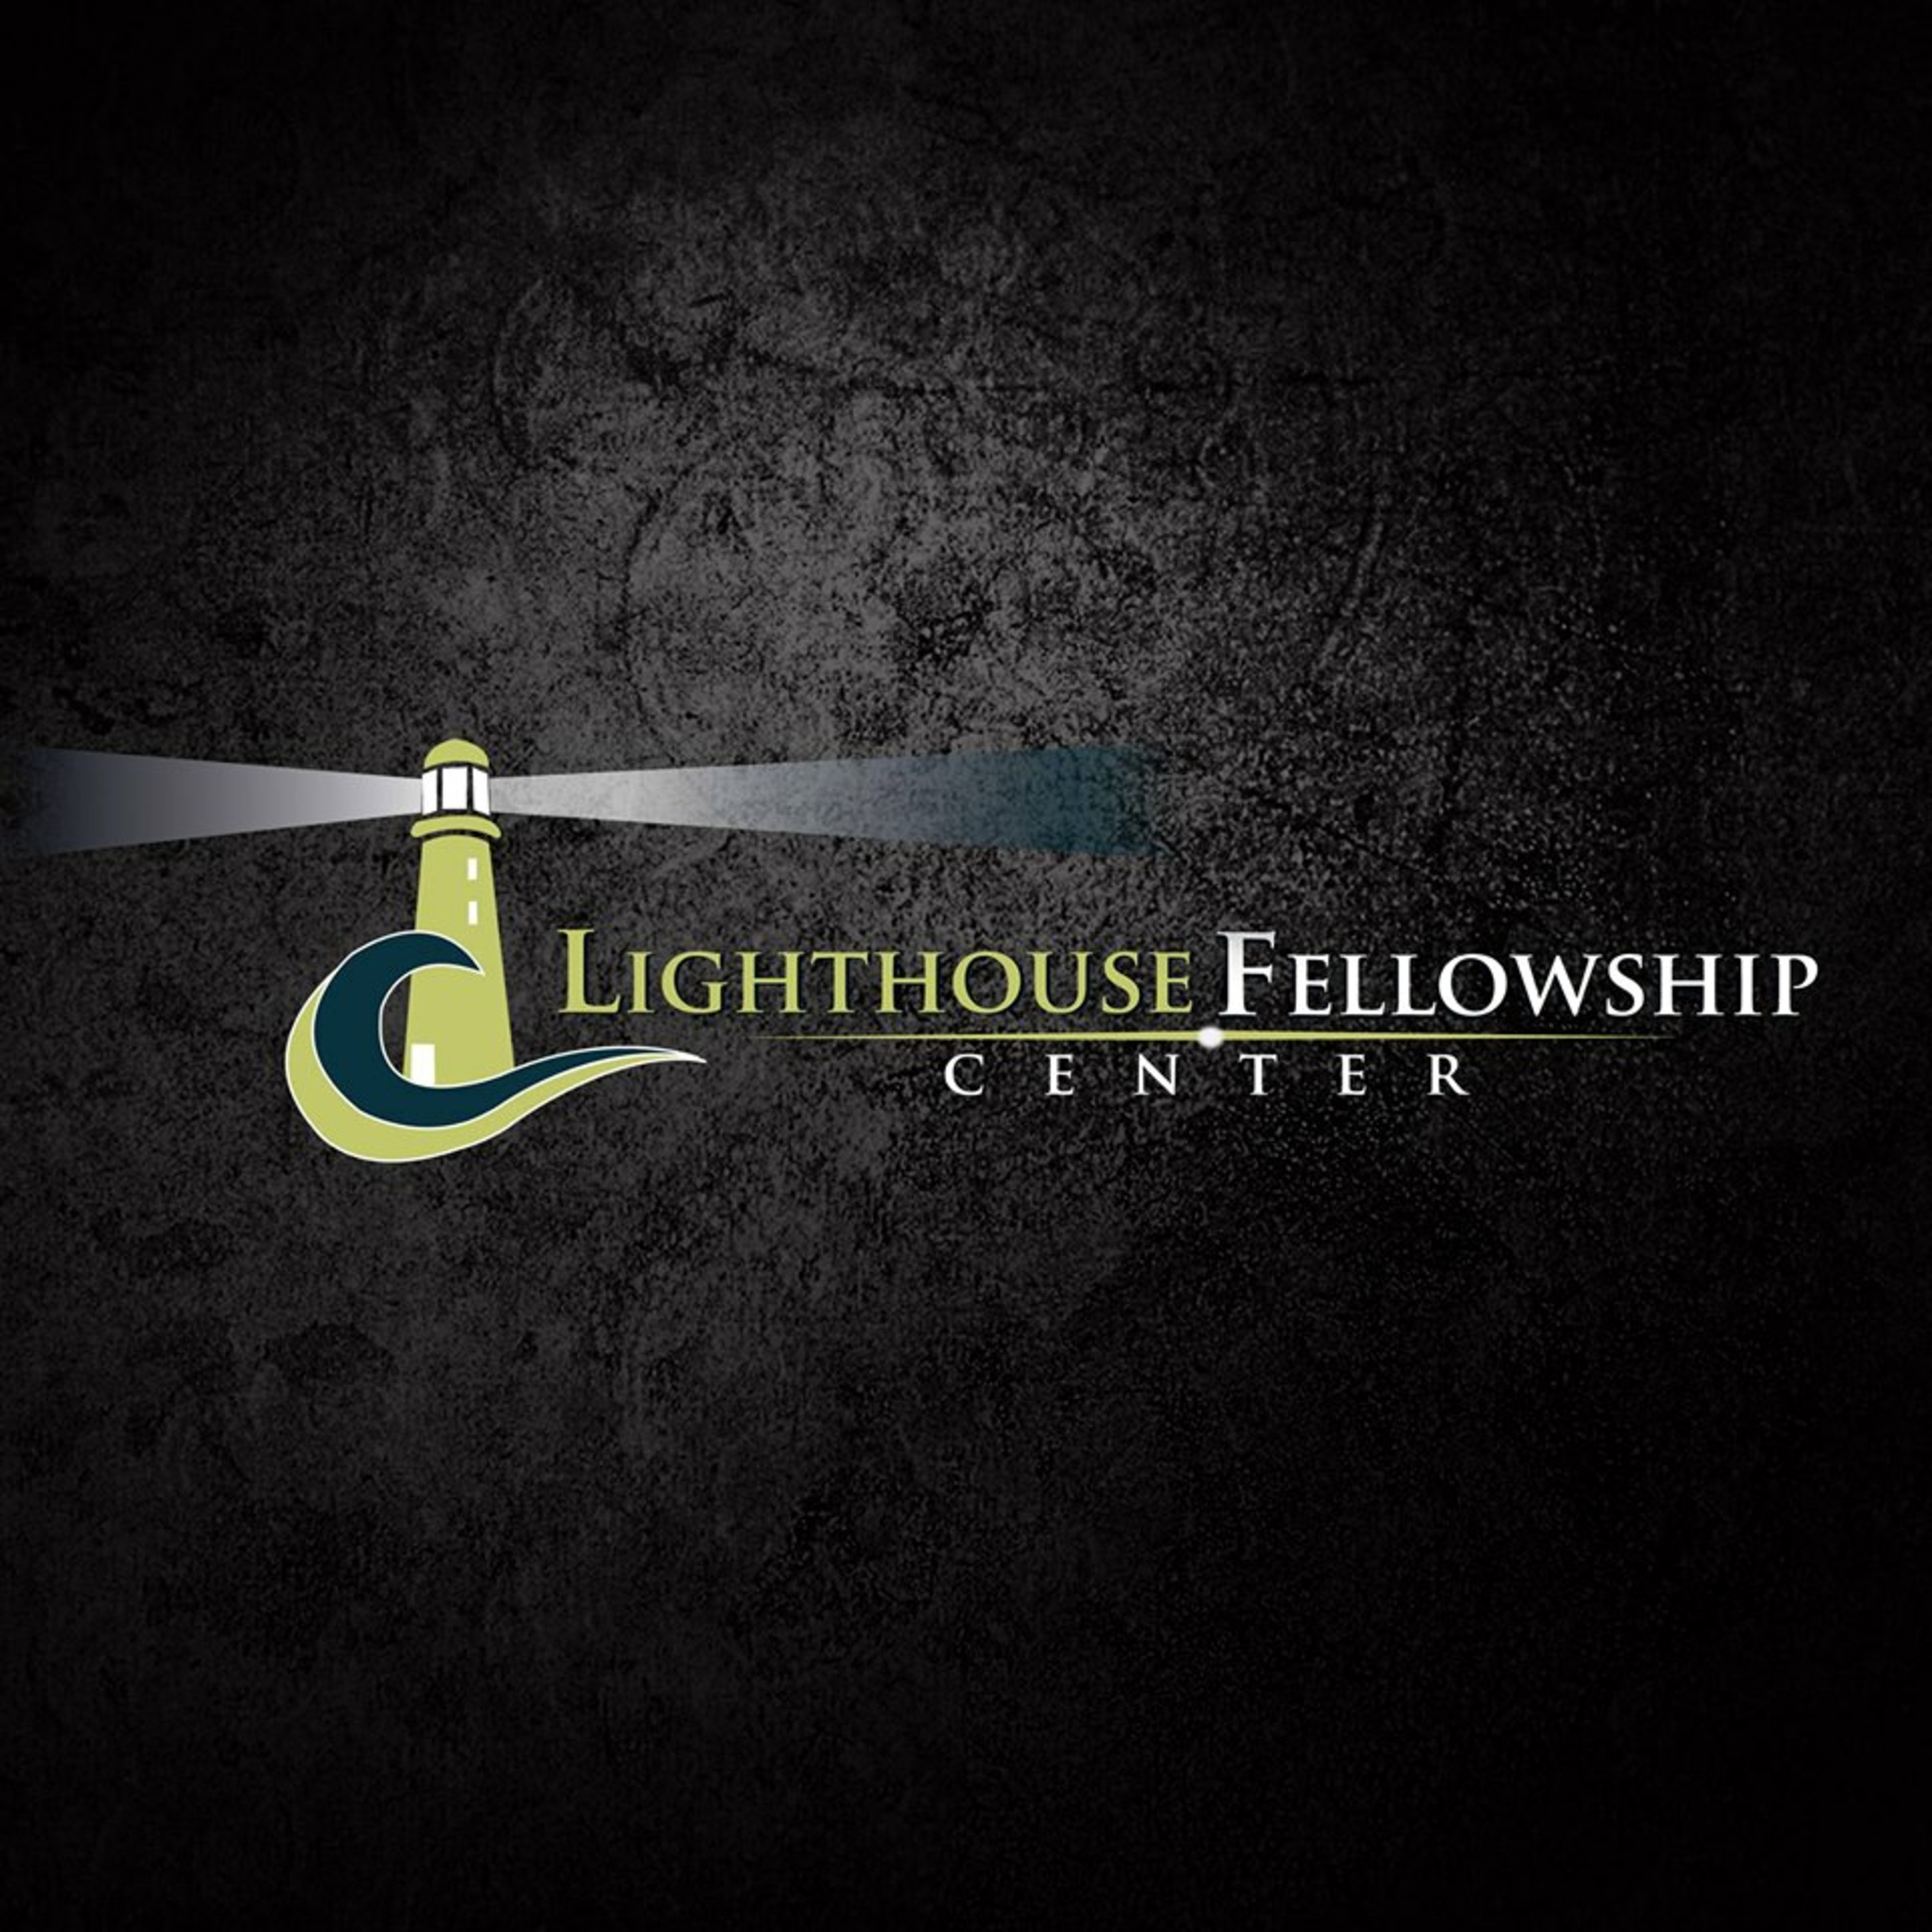 Lighthouse Fellowship Center